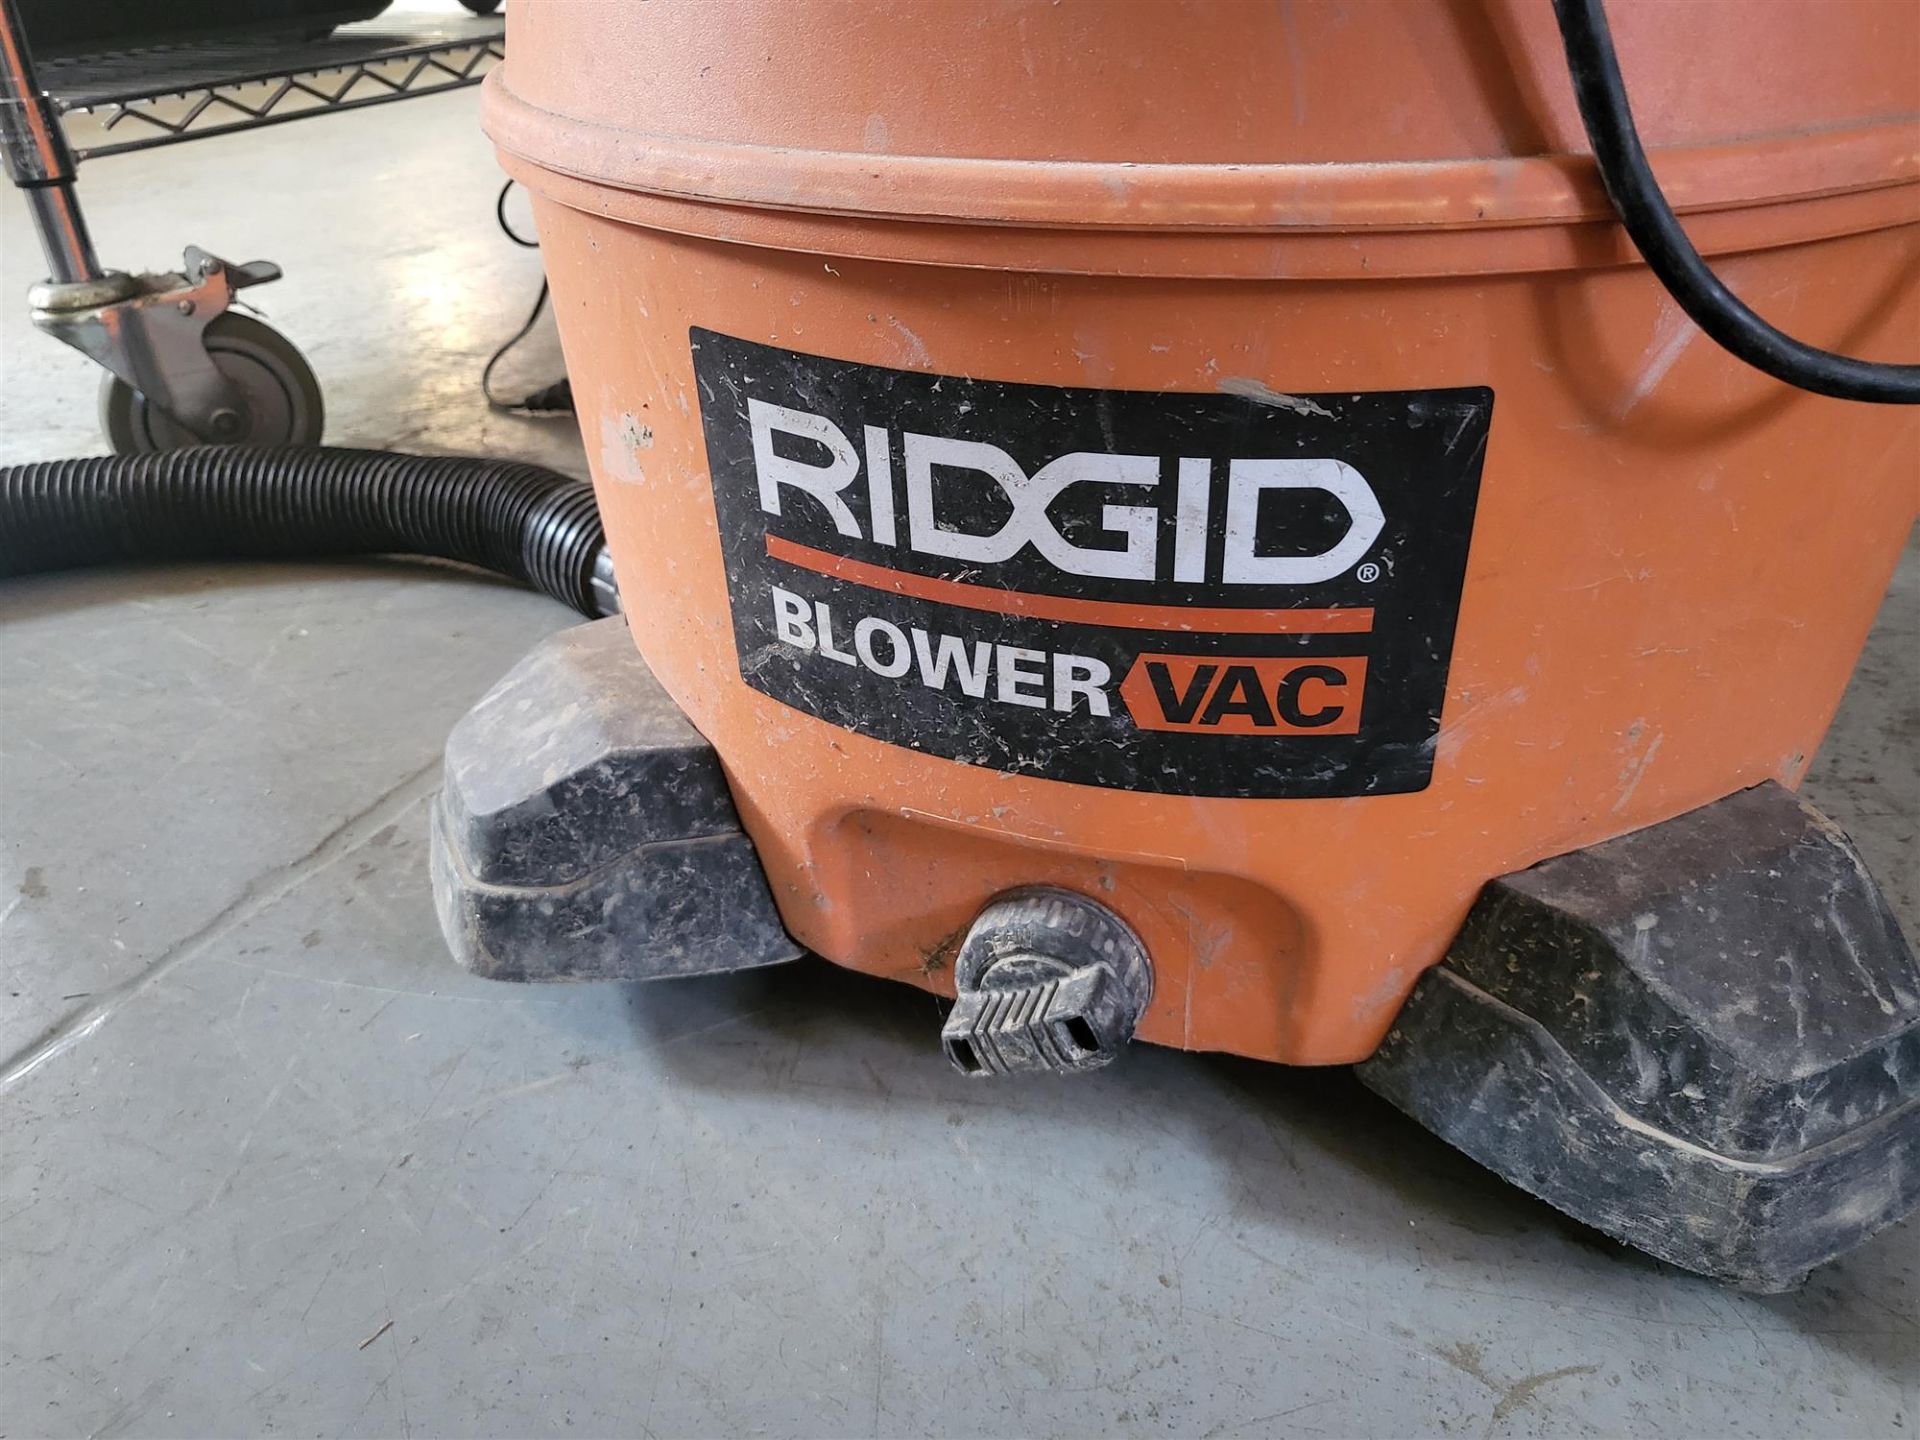 Ridgid - Blower Vac - Vaccume Cleaner - Image 2 of 4